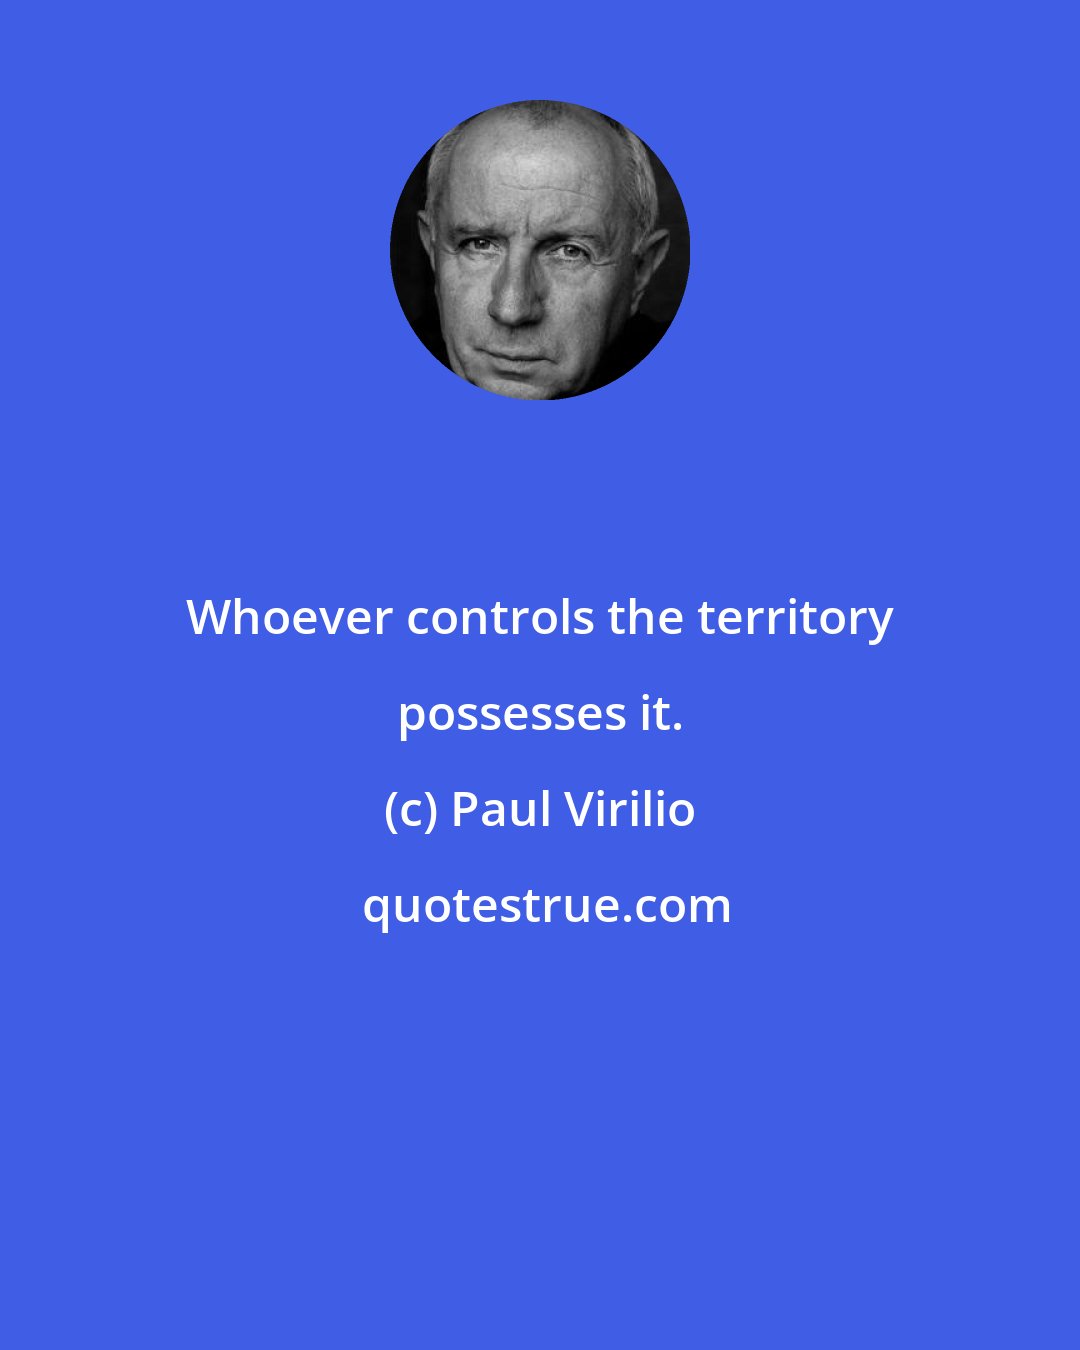 Paul Virilio: Whoever controls the territory possesses it.